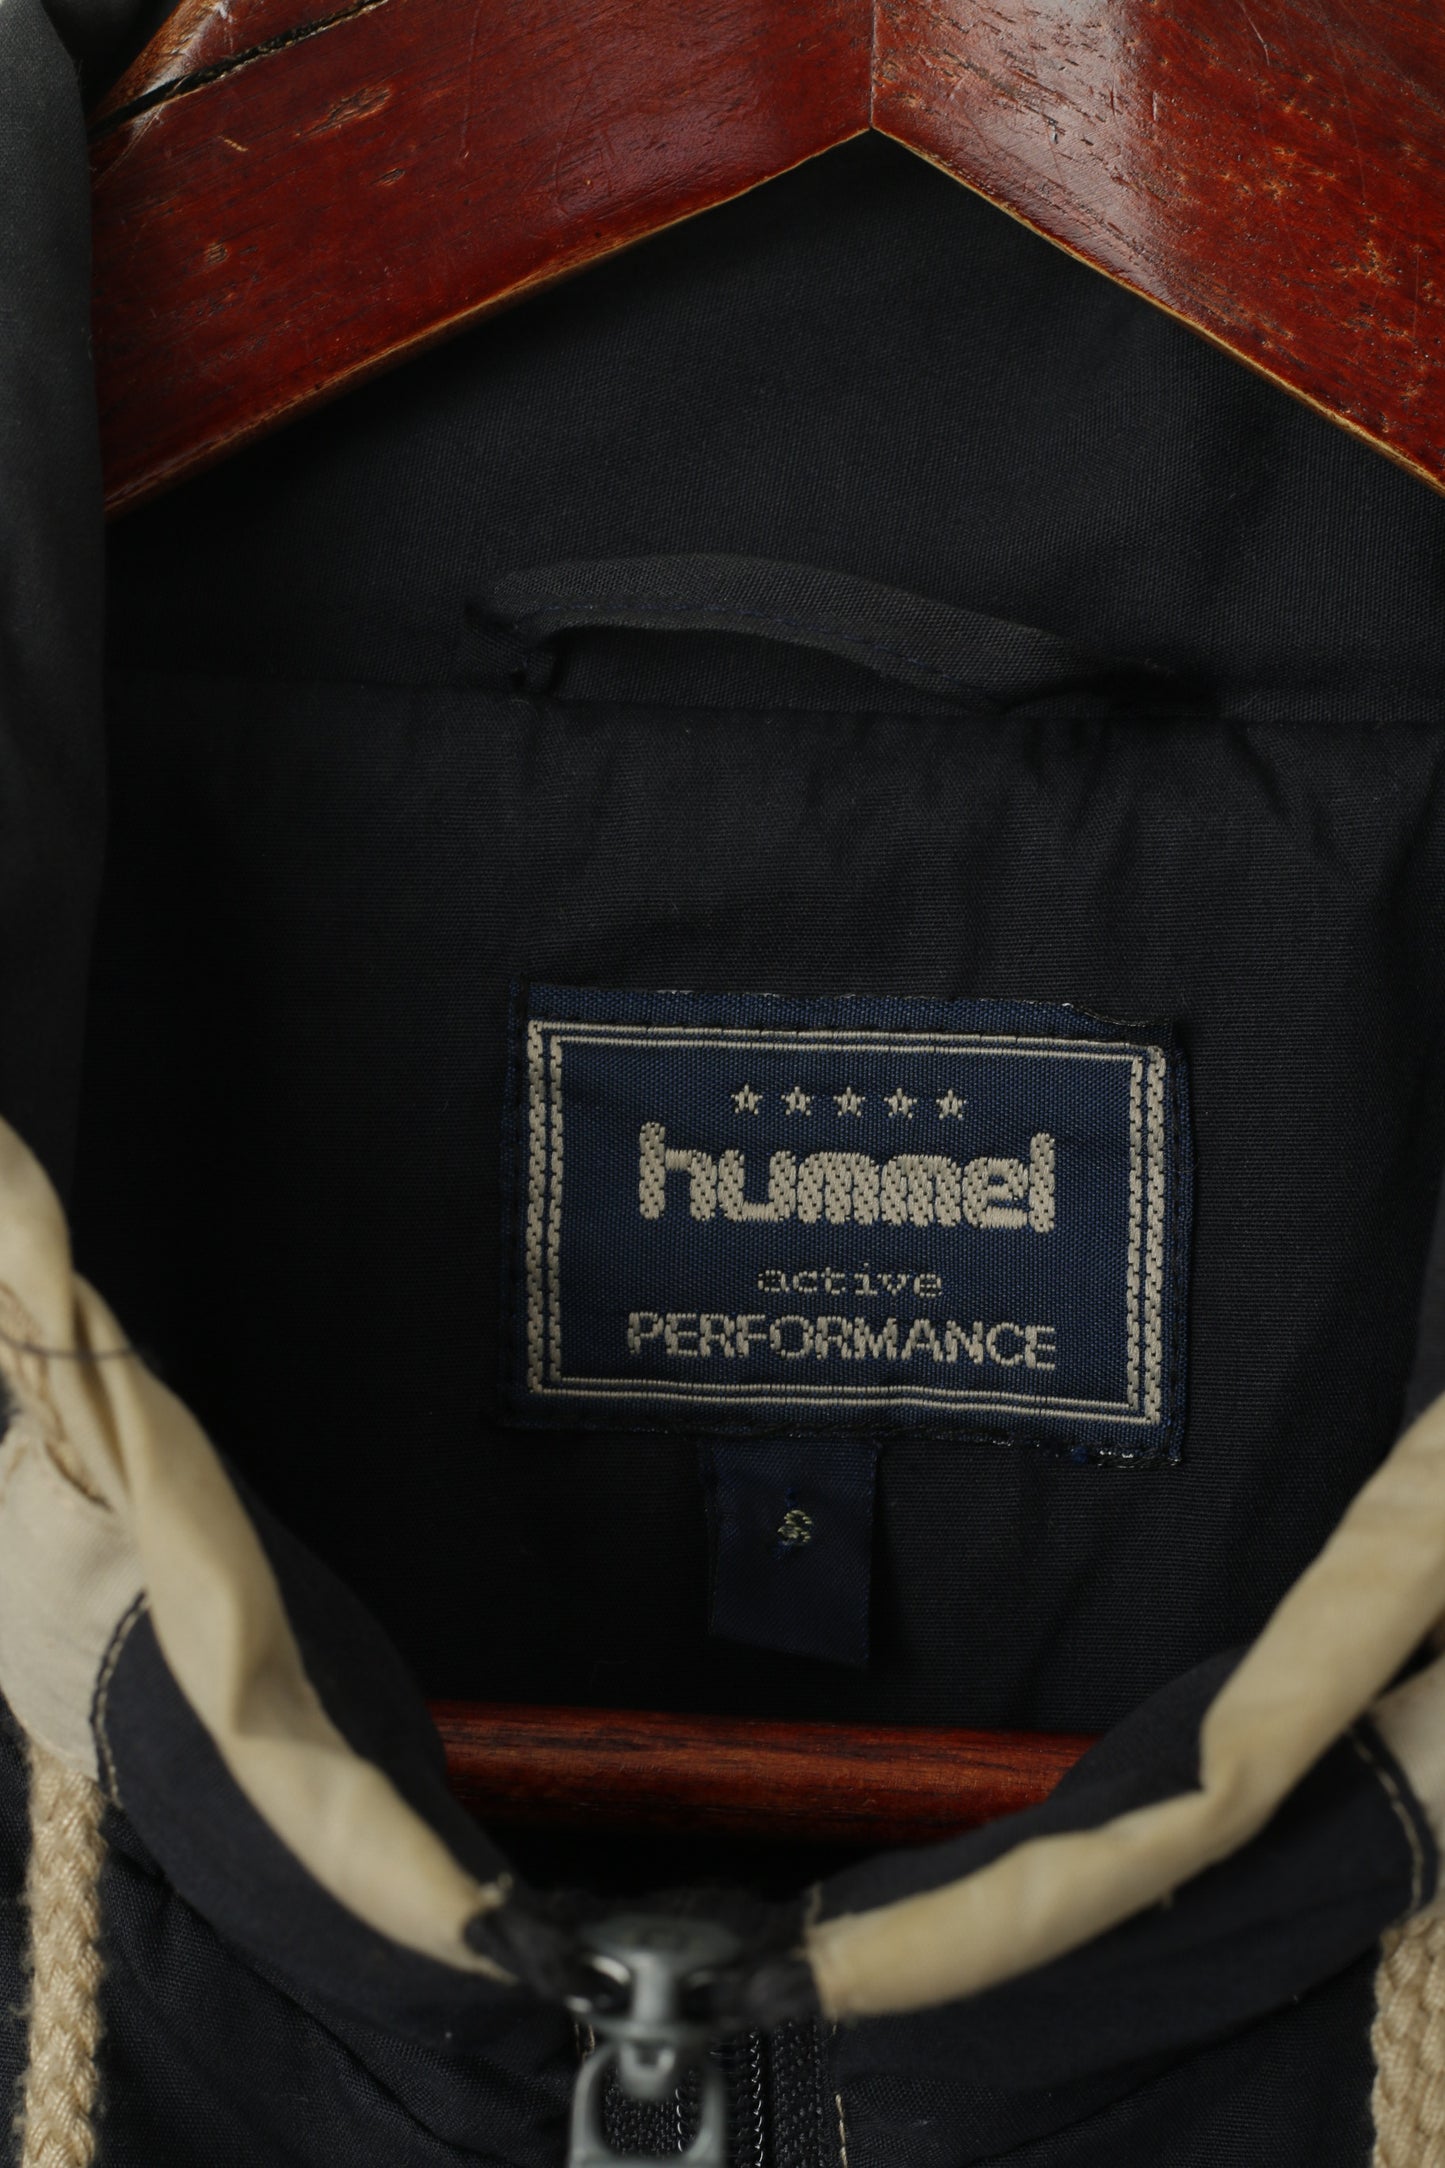 Giacca da uomo Hummel Bomber leggero blu scuro Vintage anni '90 Inghilterra Sportswear Top